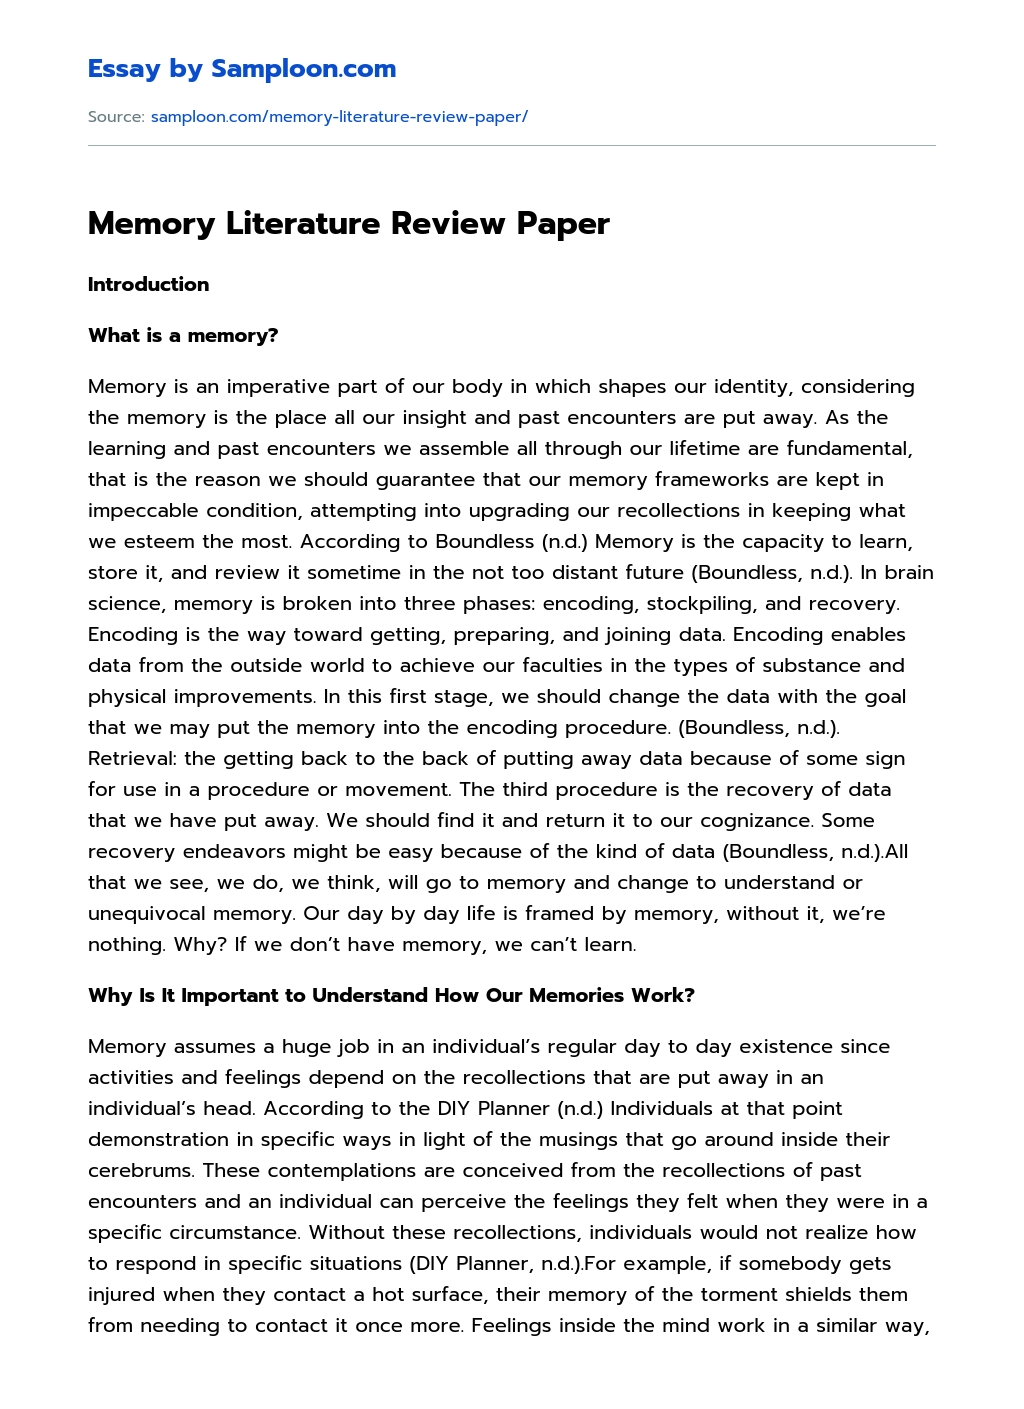 Memory Literature Review Paper essay